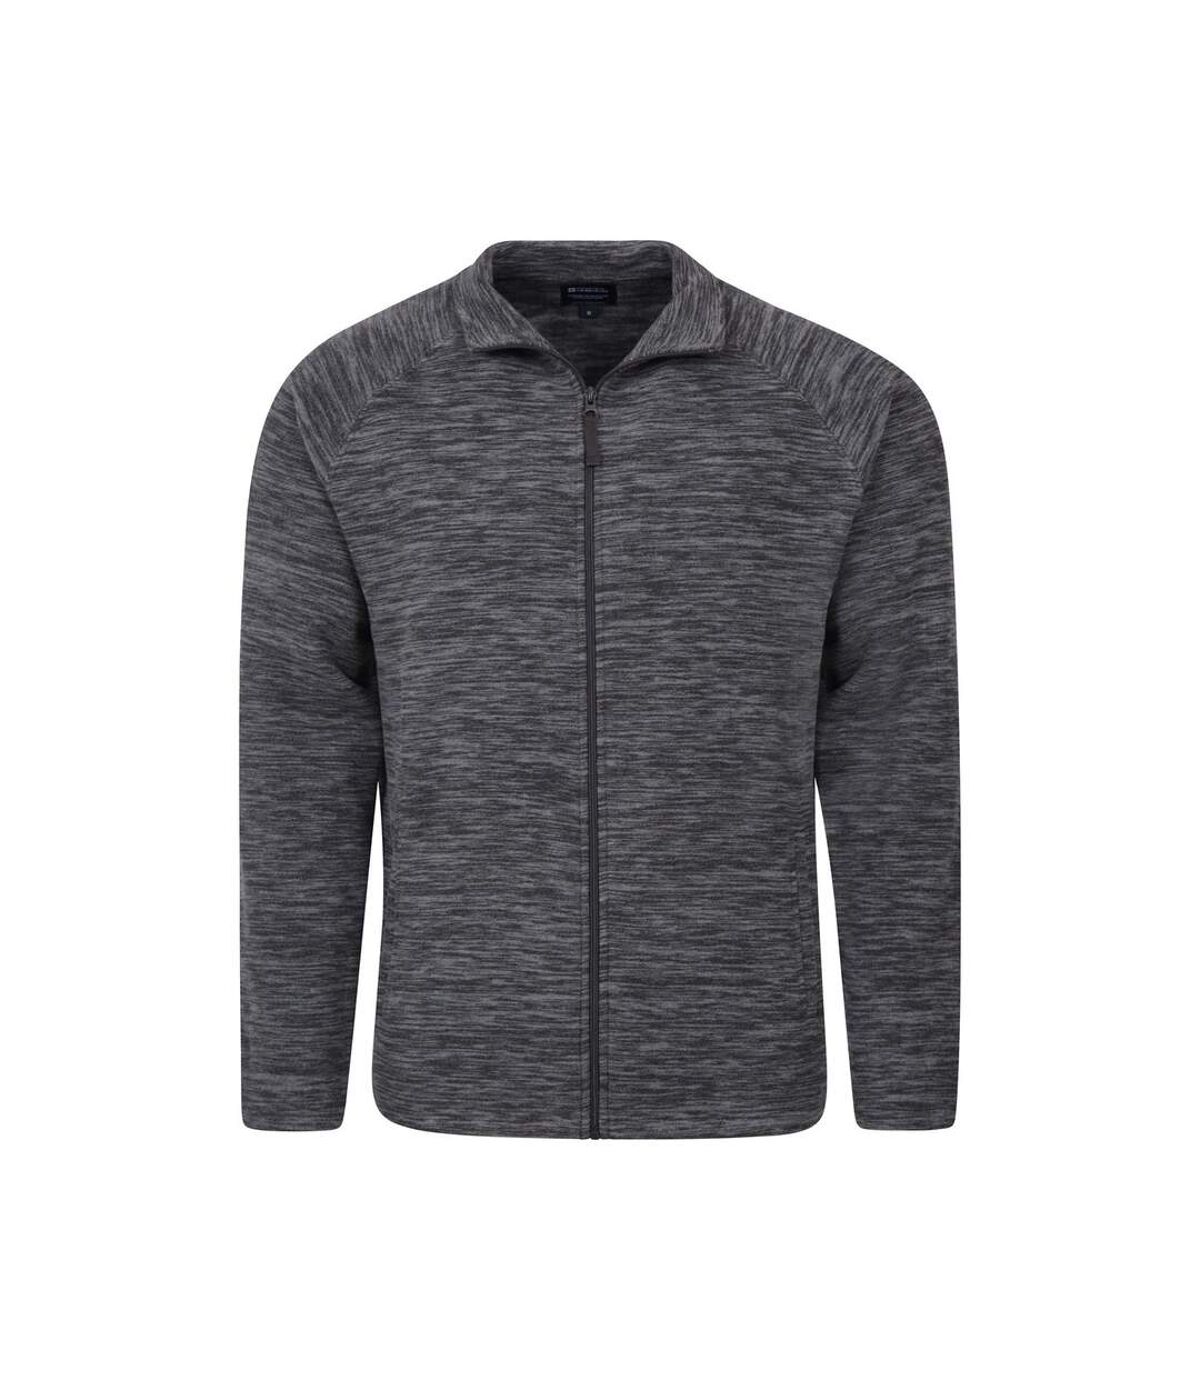 Mountain Warehouse Mens Snowdon II Full Zip Fleece Jacket (Gray)